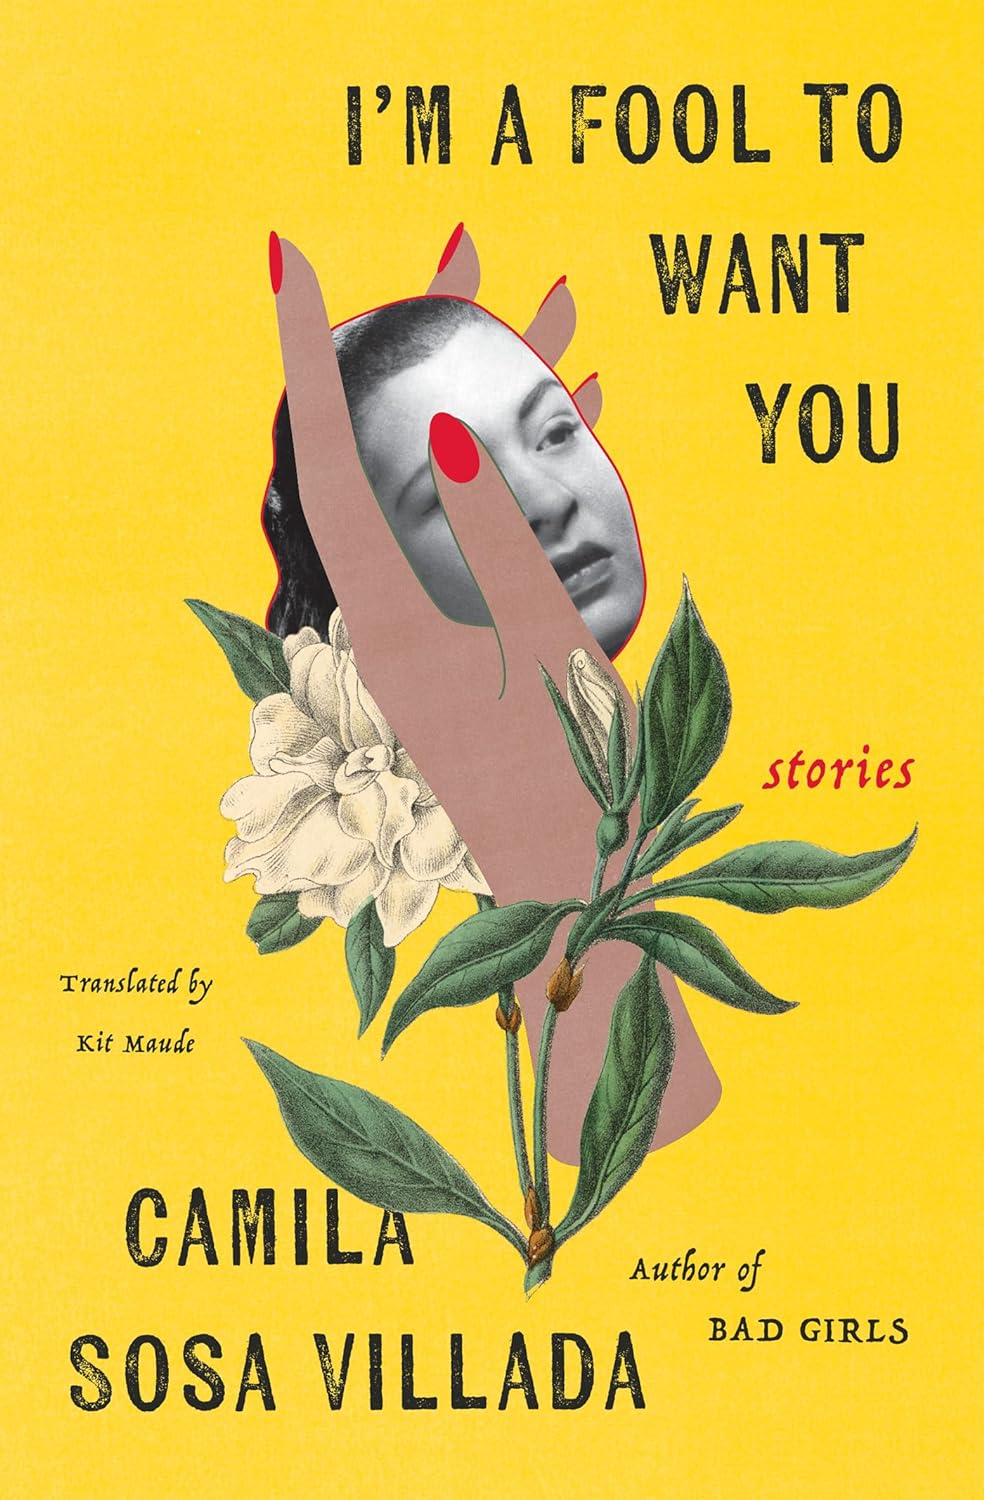 I’m a Fool to Want You by Camila Sosa Villada, translated by Kit Maude